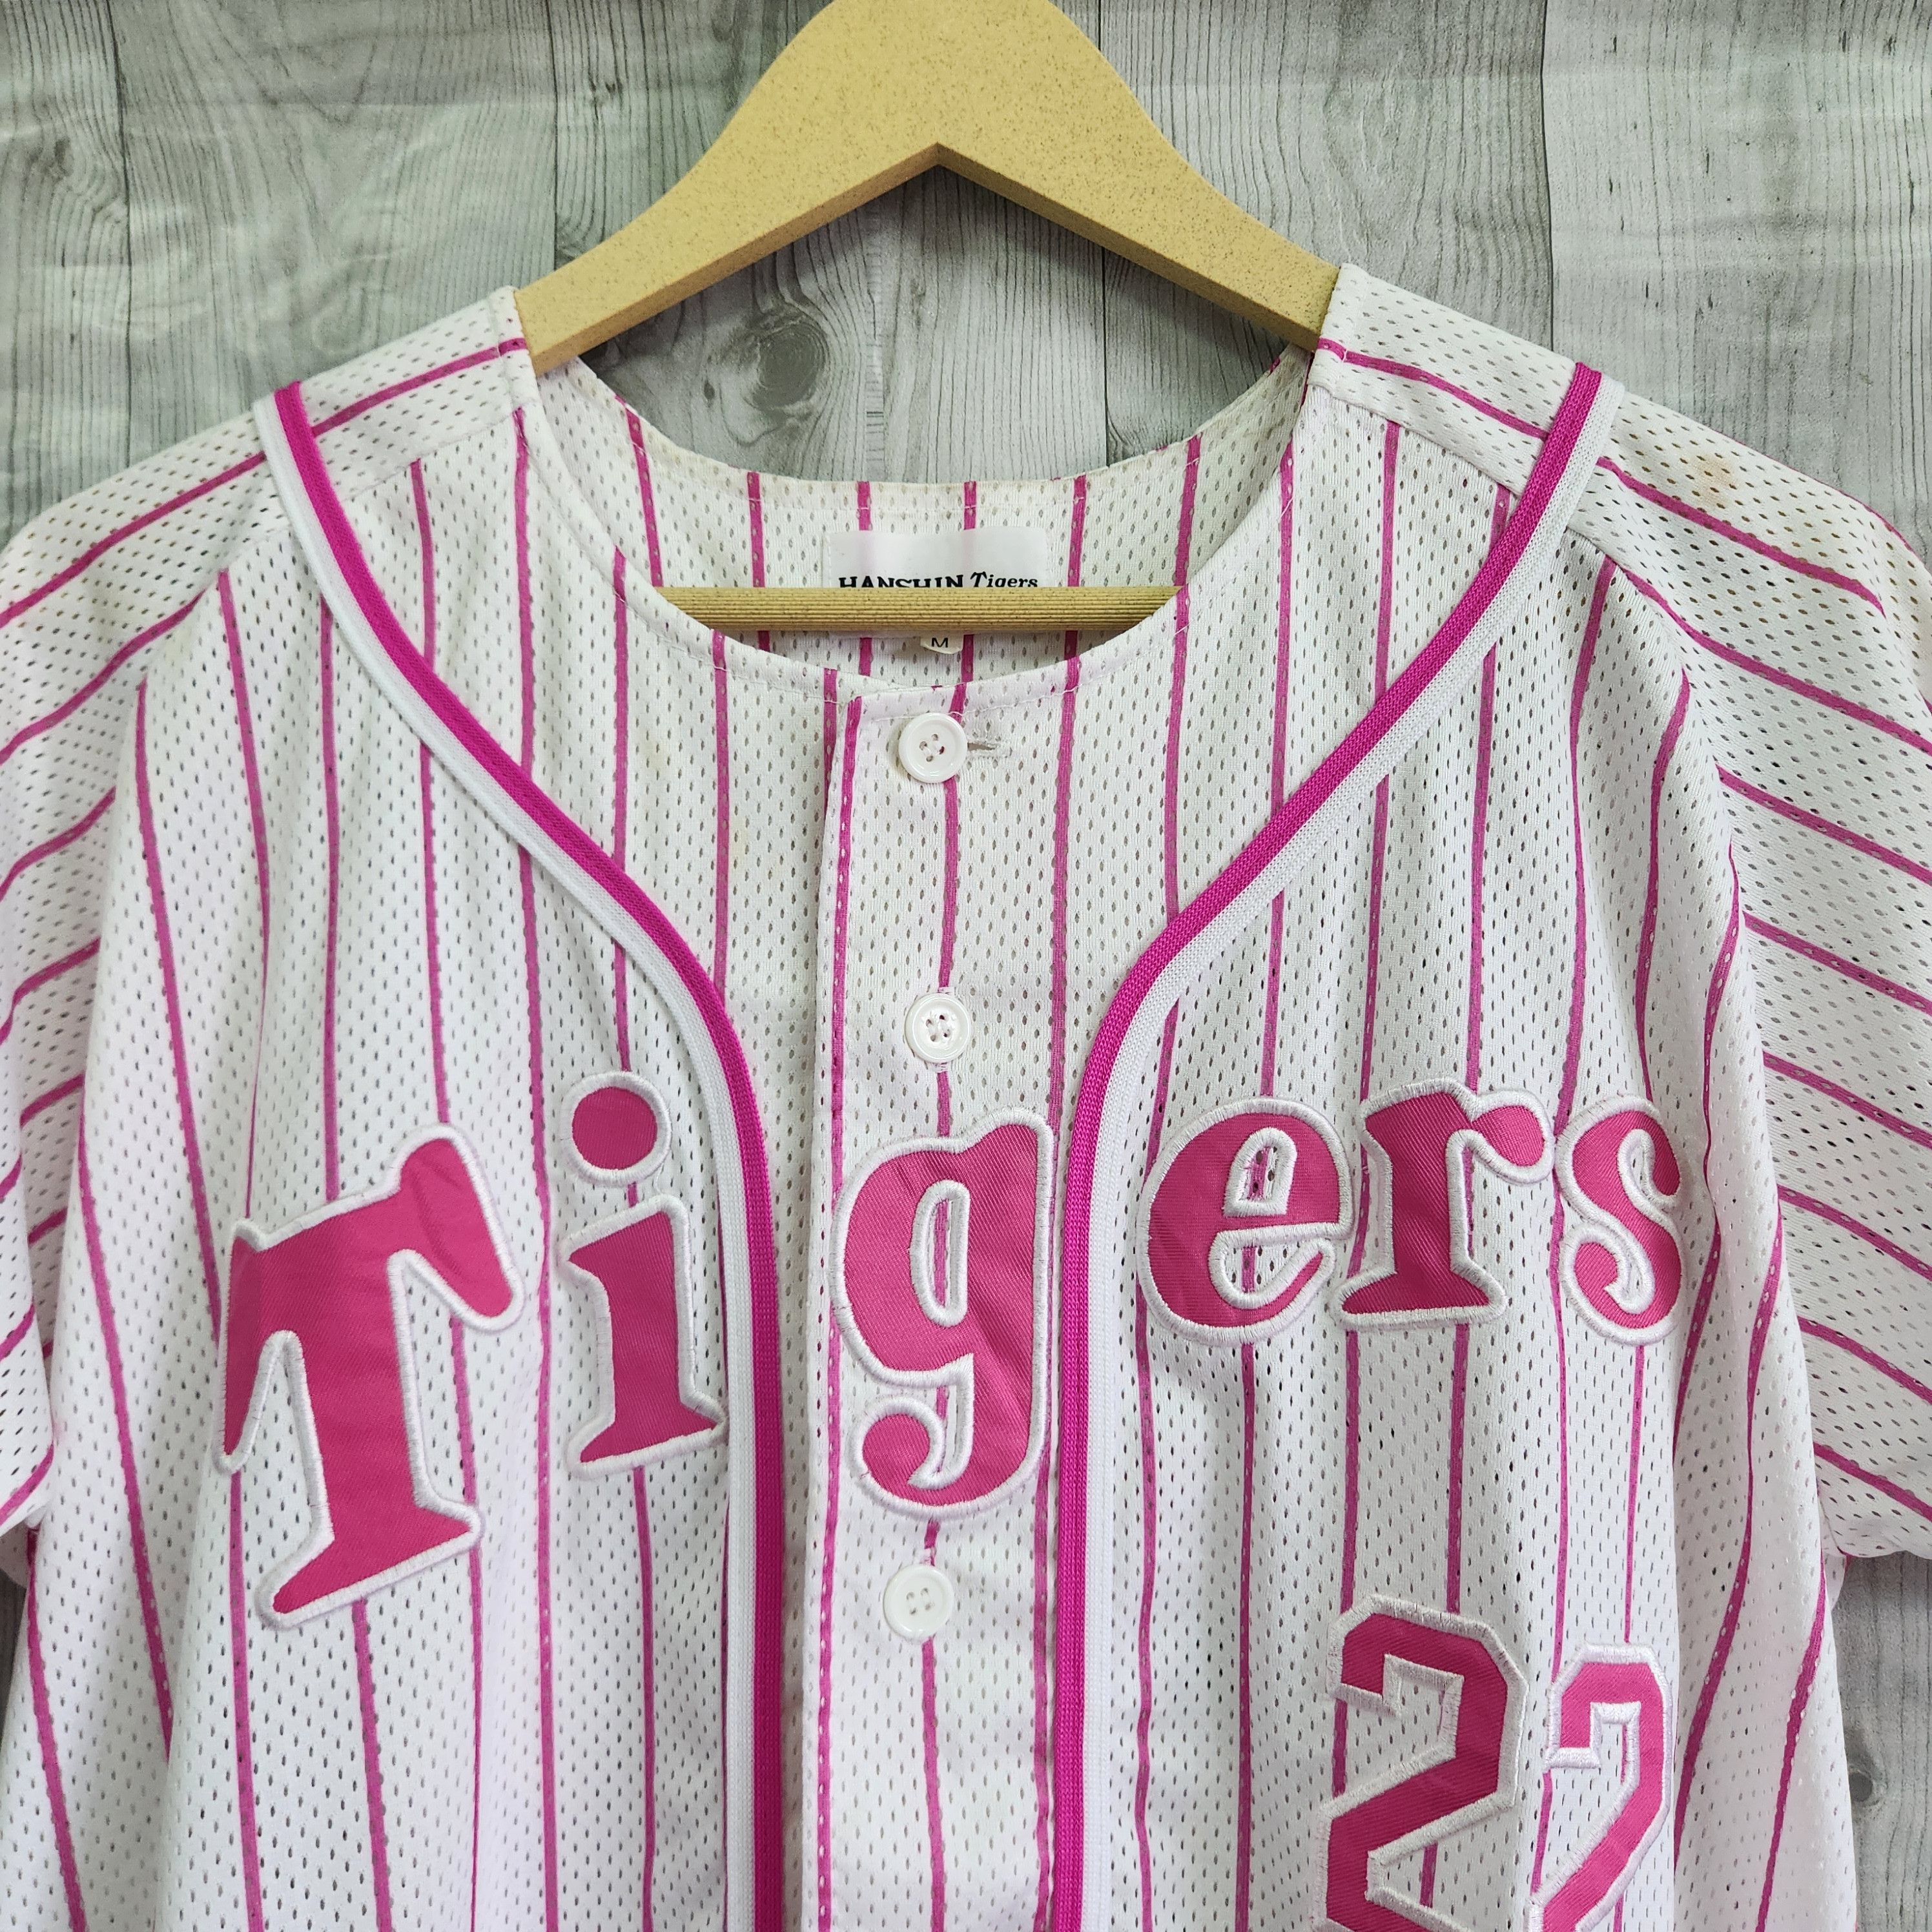 STEALS Hanshin Tigers Vintage Y2K Baseball Jersey 22 Japan - 8